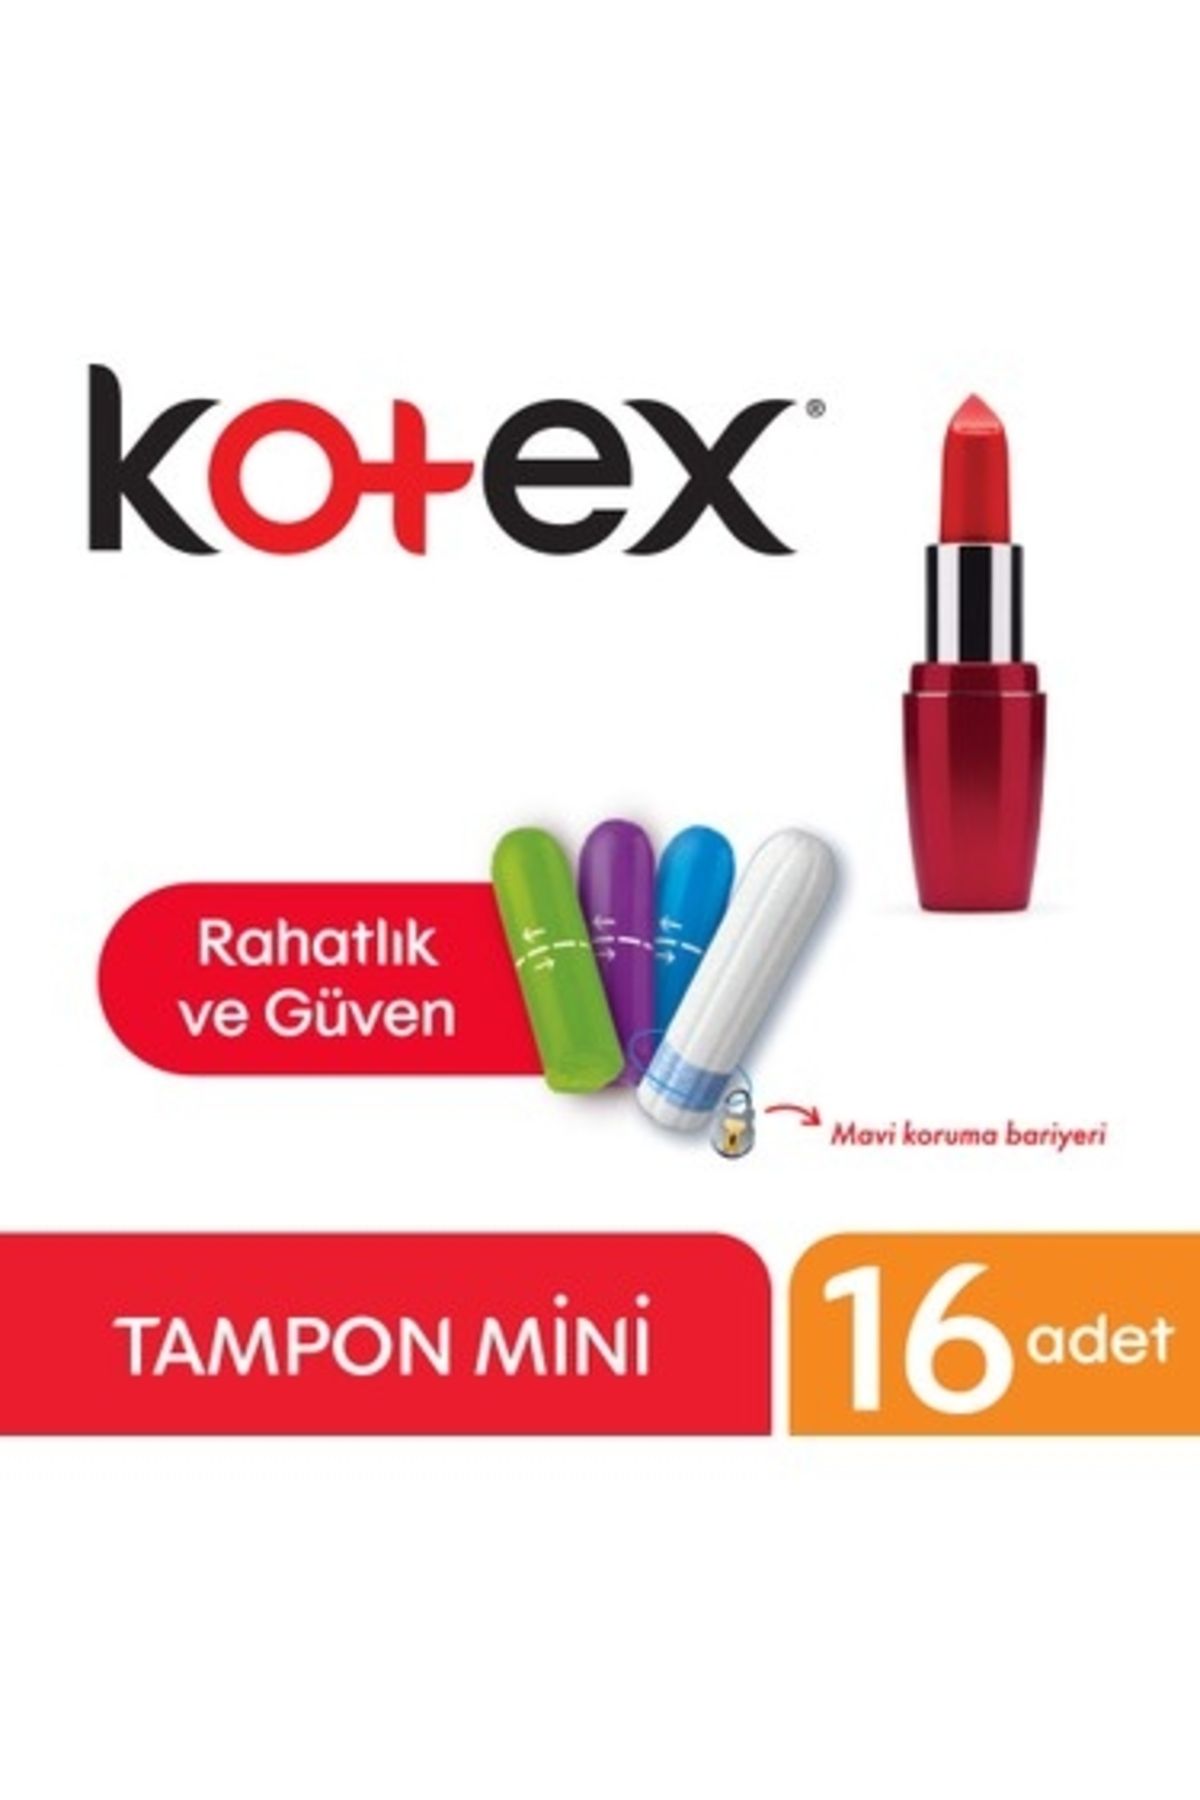 Kotex Tampon Mini ( 1 ADET )